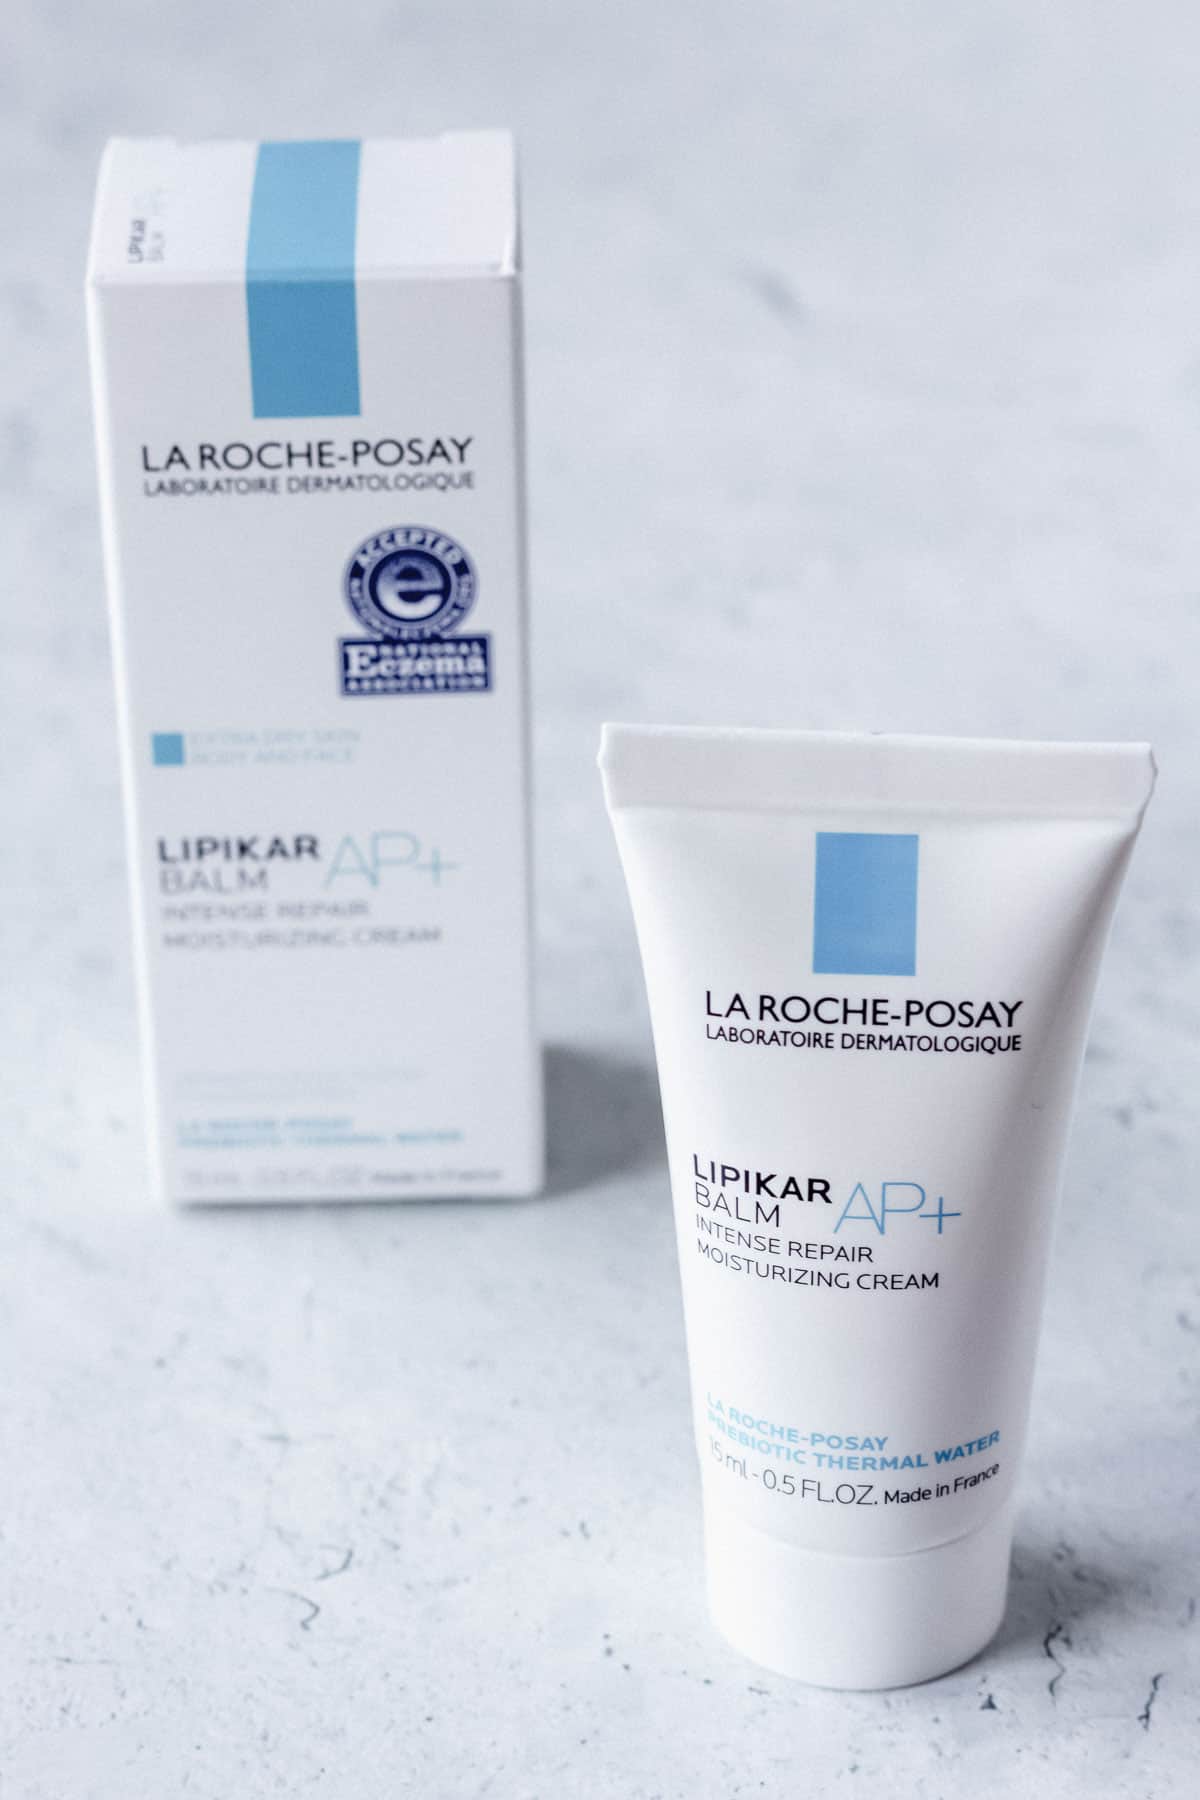 La Roche-Posay Lipikar Balm Intense Repiar Moisturizing Cream sample tube and box on a white background